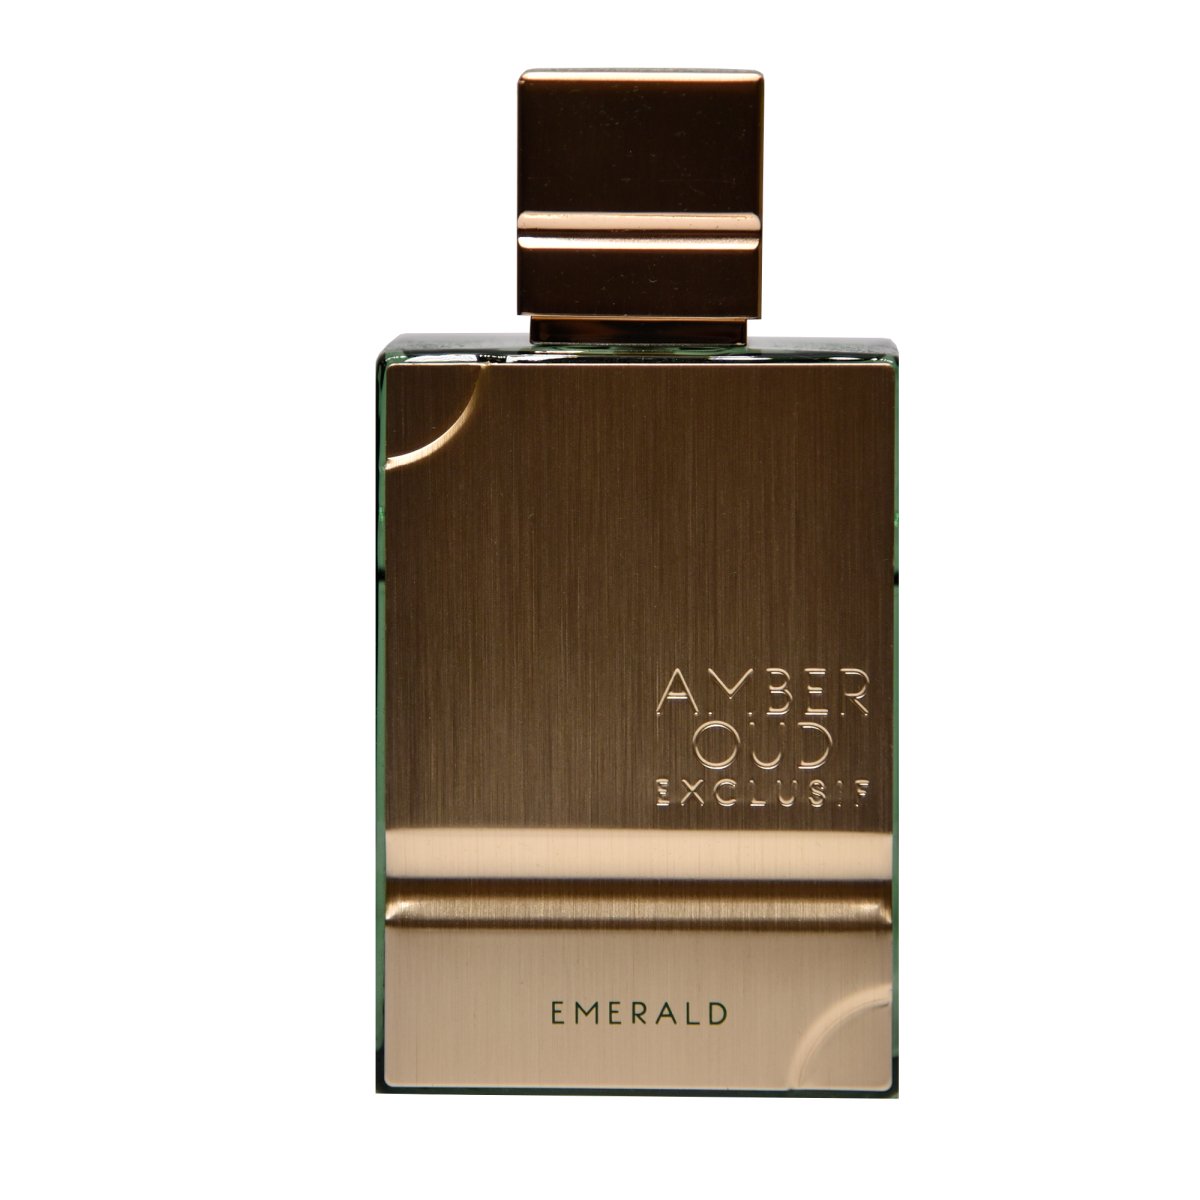  - Al Haramain - 2.0 oz - Eau de Parfum - Fragrance - 3760327810023 - Fragrance